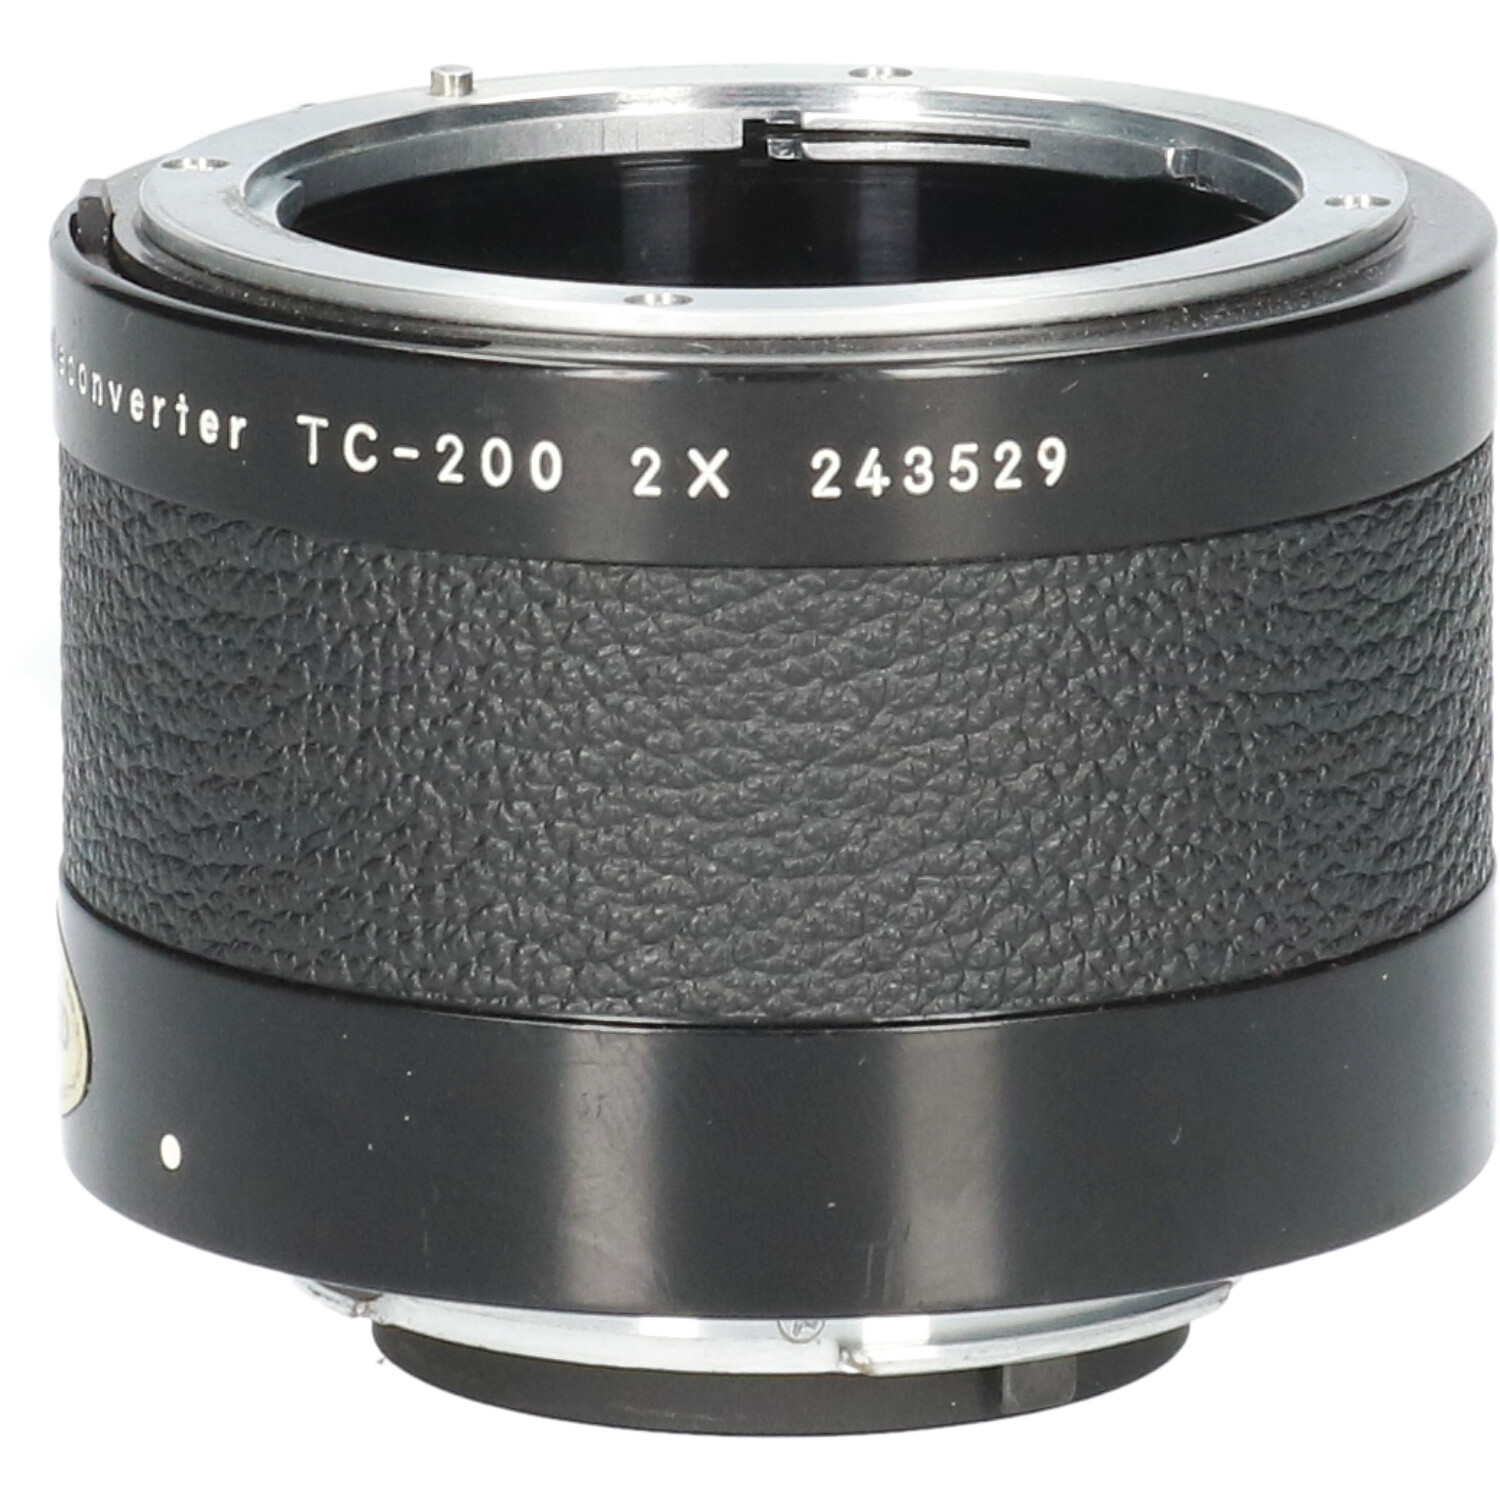 Nikon Teleconverter TC-200 2X - No-Digital